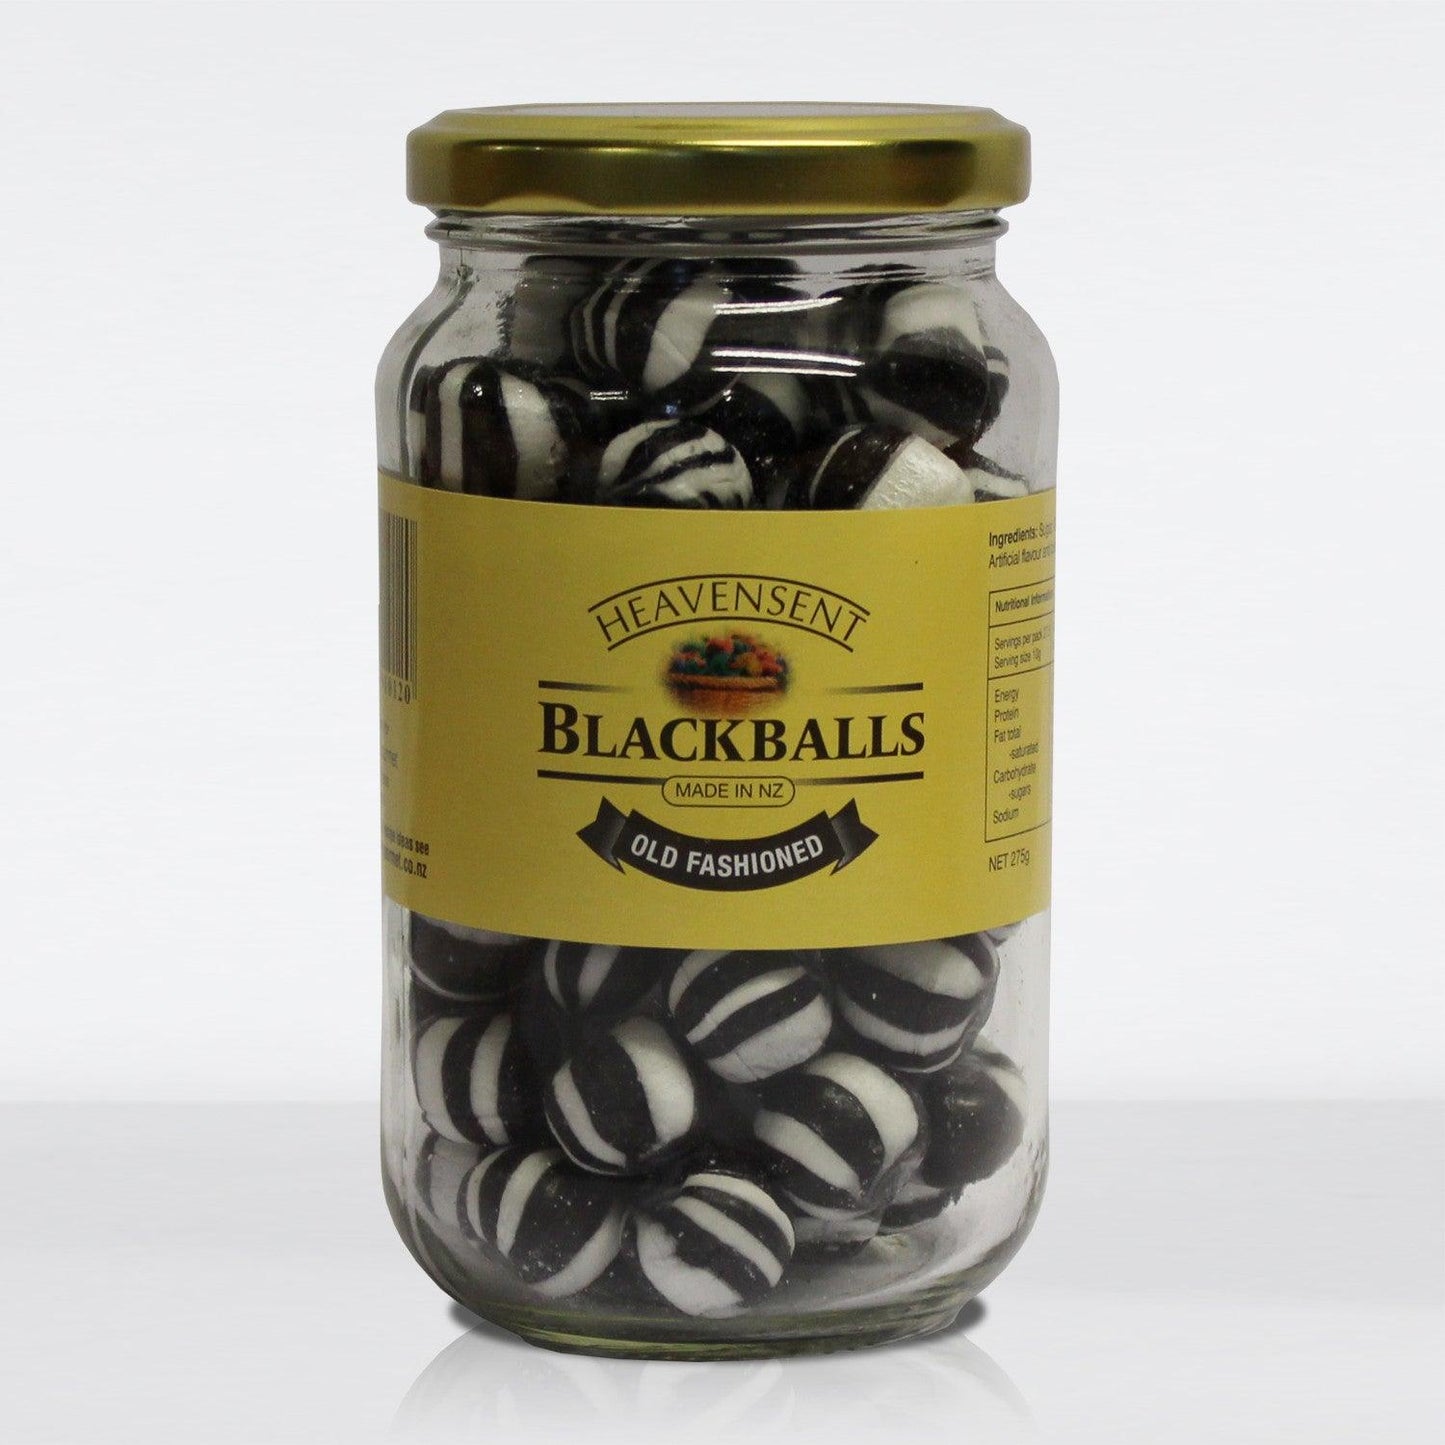 Blackballs Old Fashioned Sweets 275g Heavensent